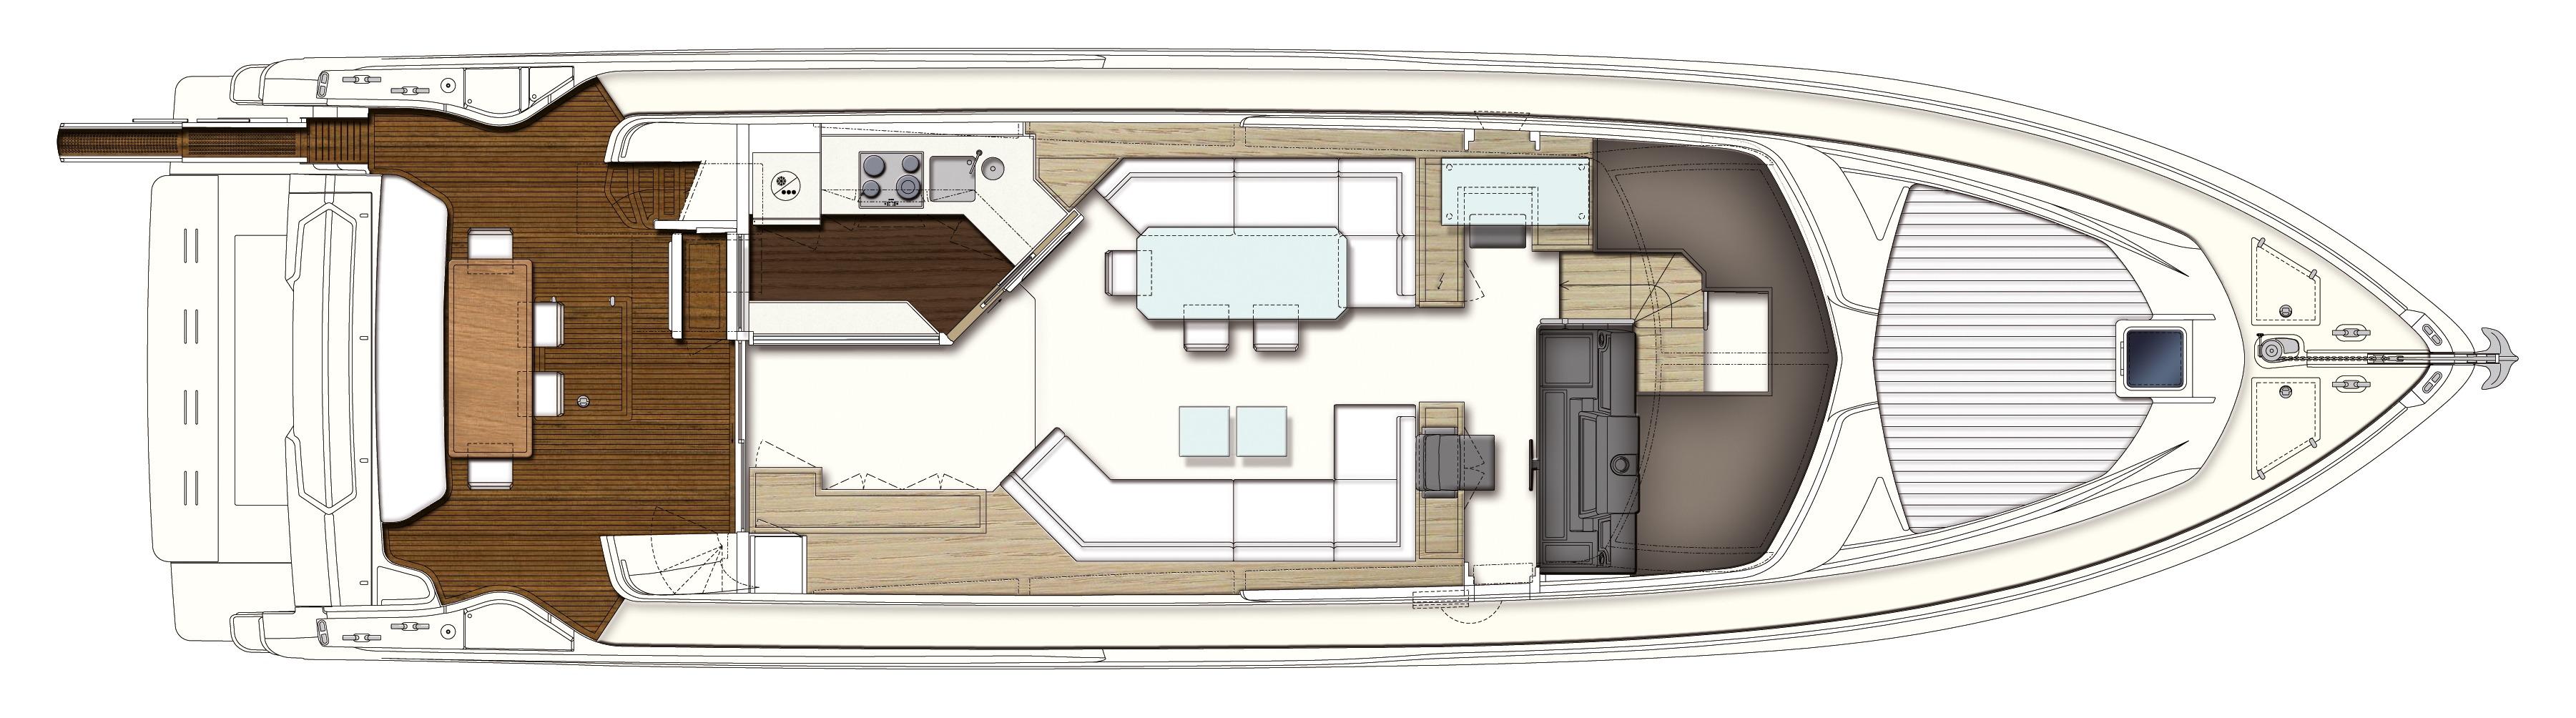 Manufacturer Provided Image: Ferretti 690 Main Deck 4 Cabin Layout Plan